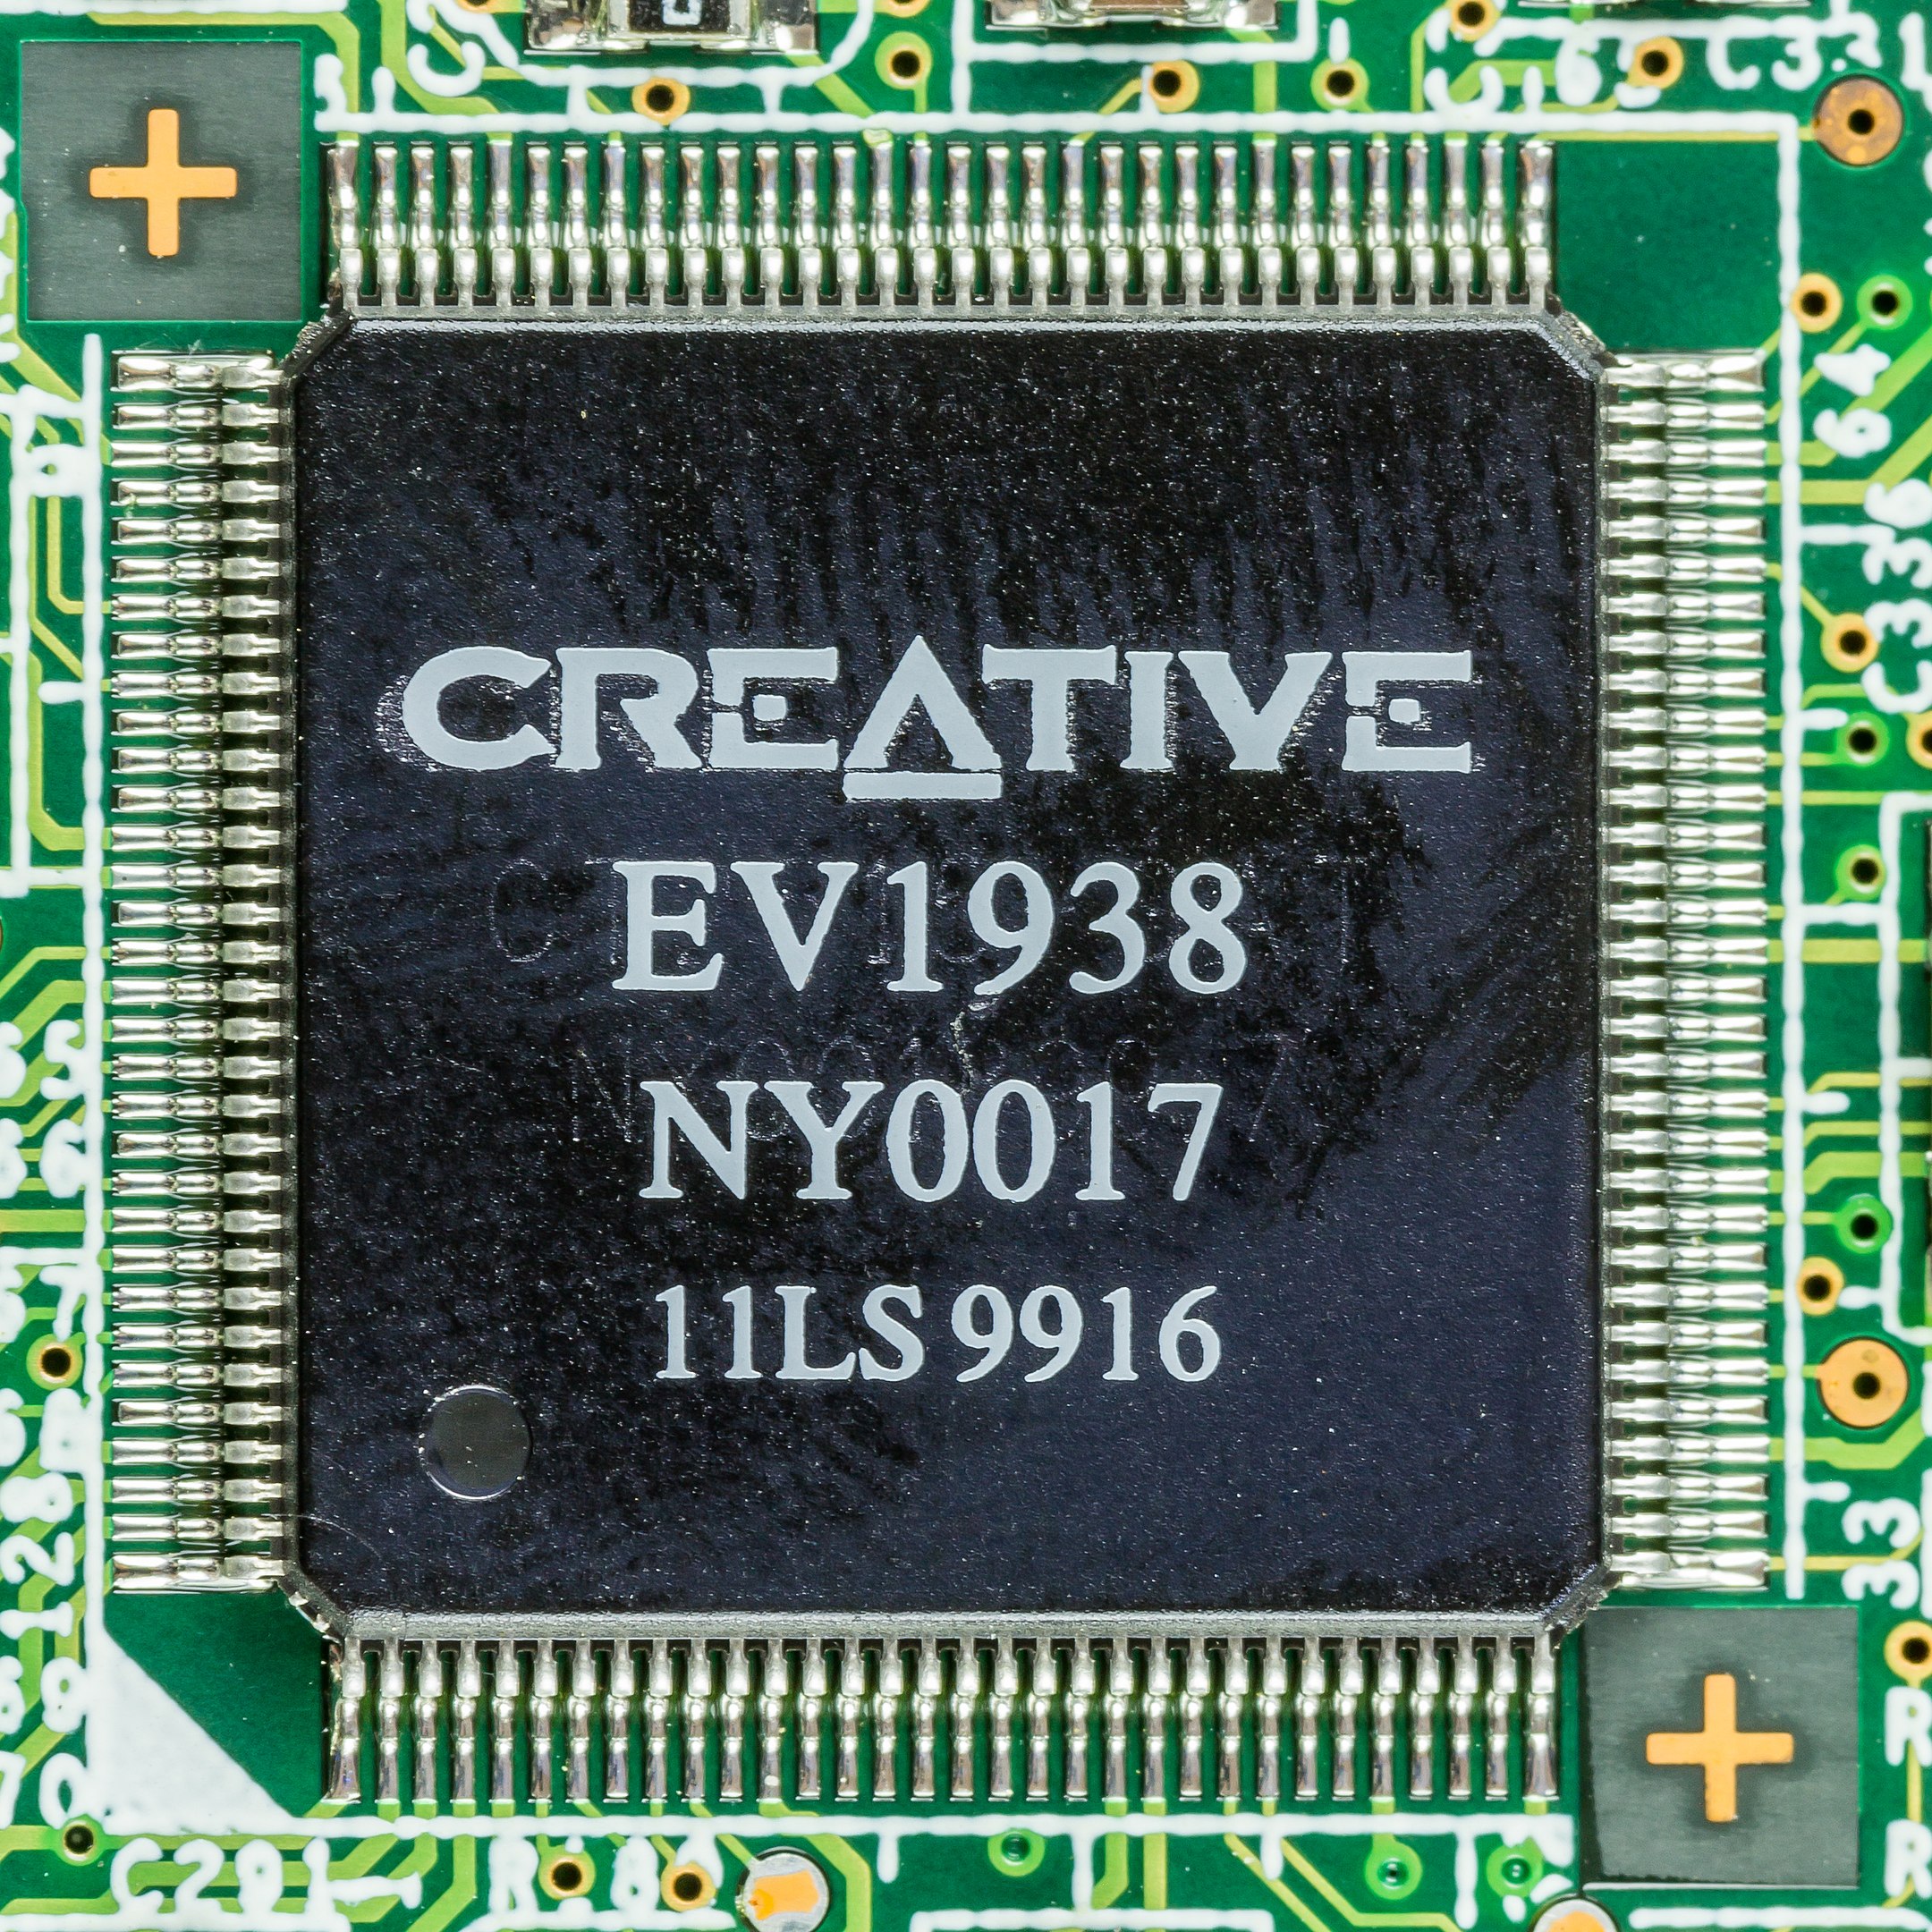 Creative EV1938